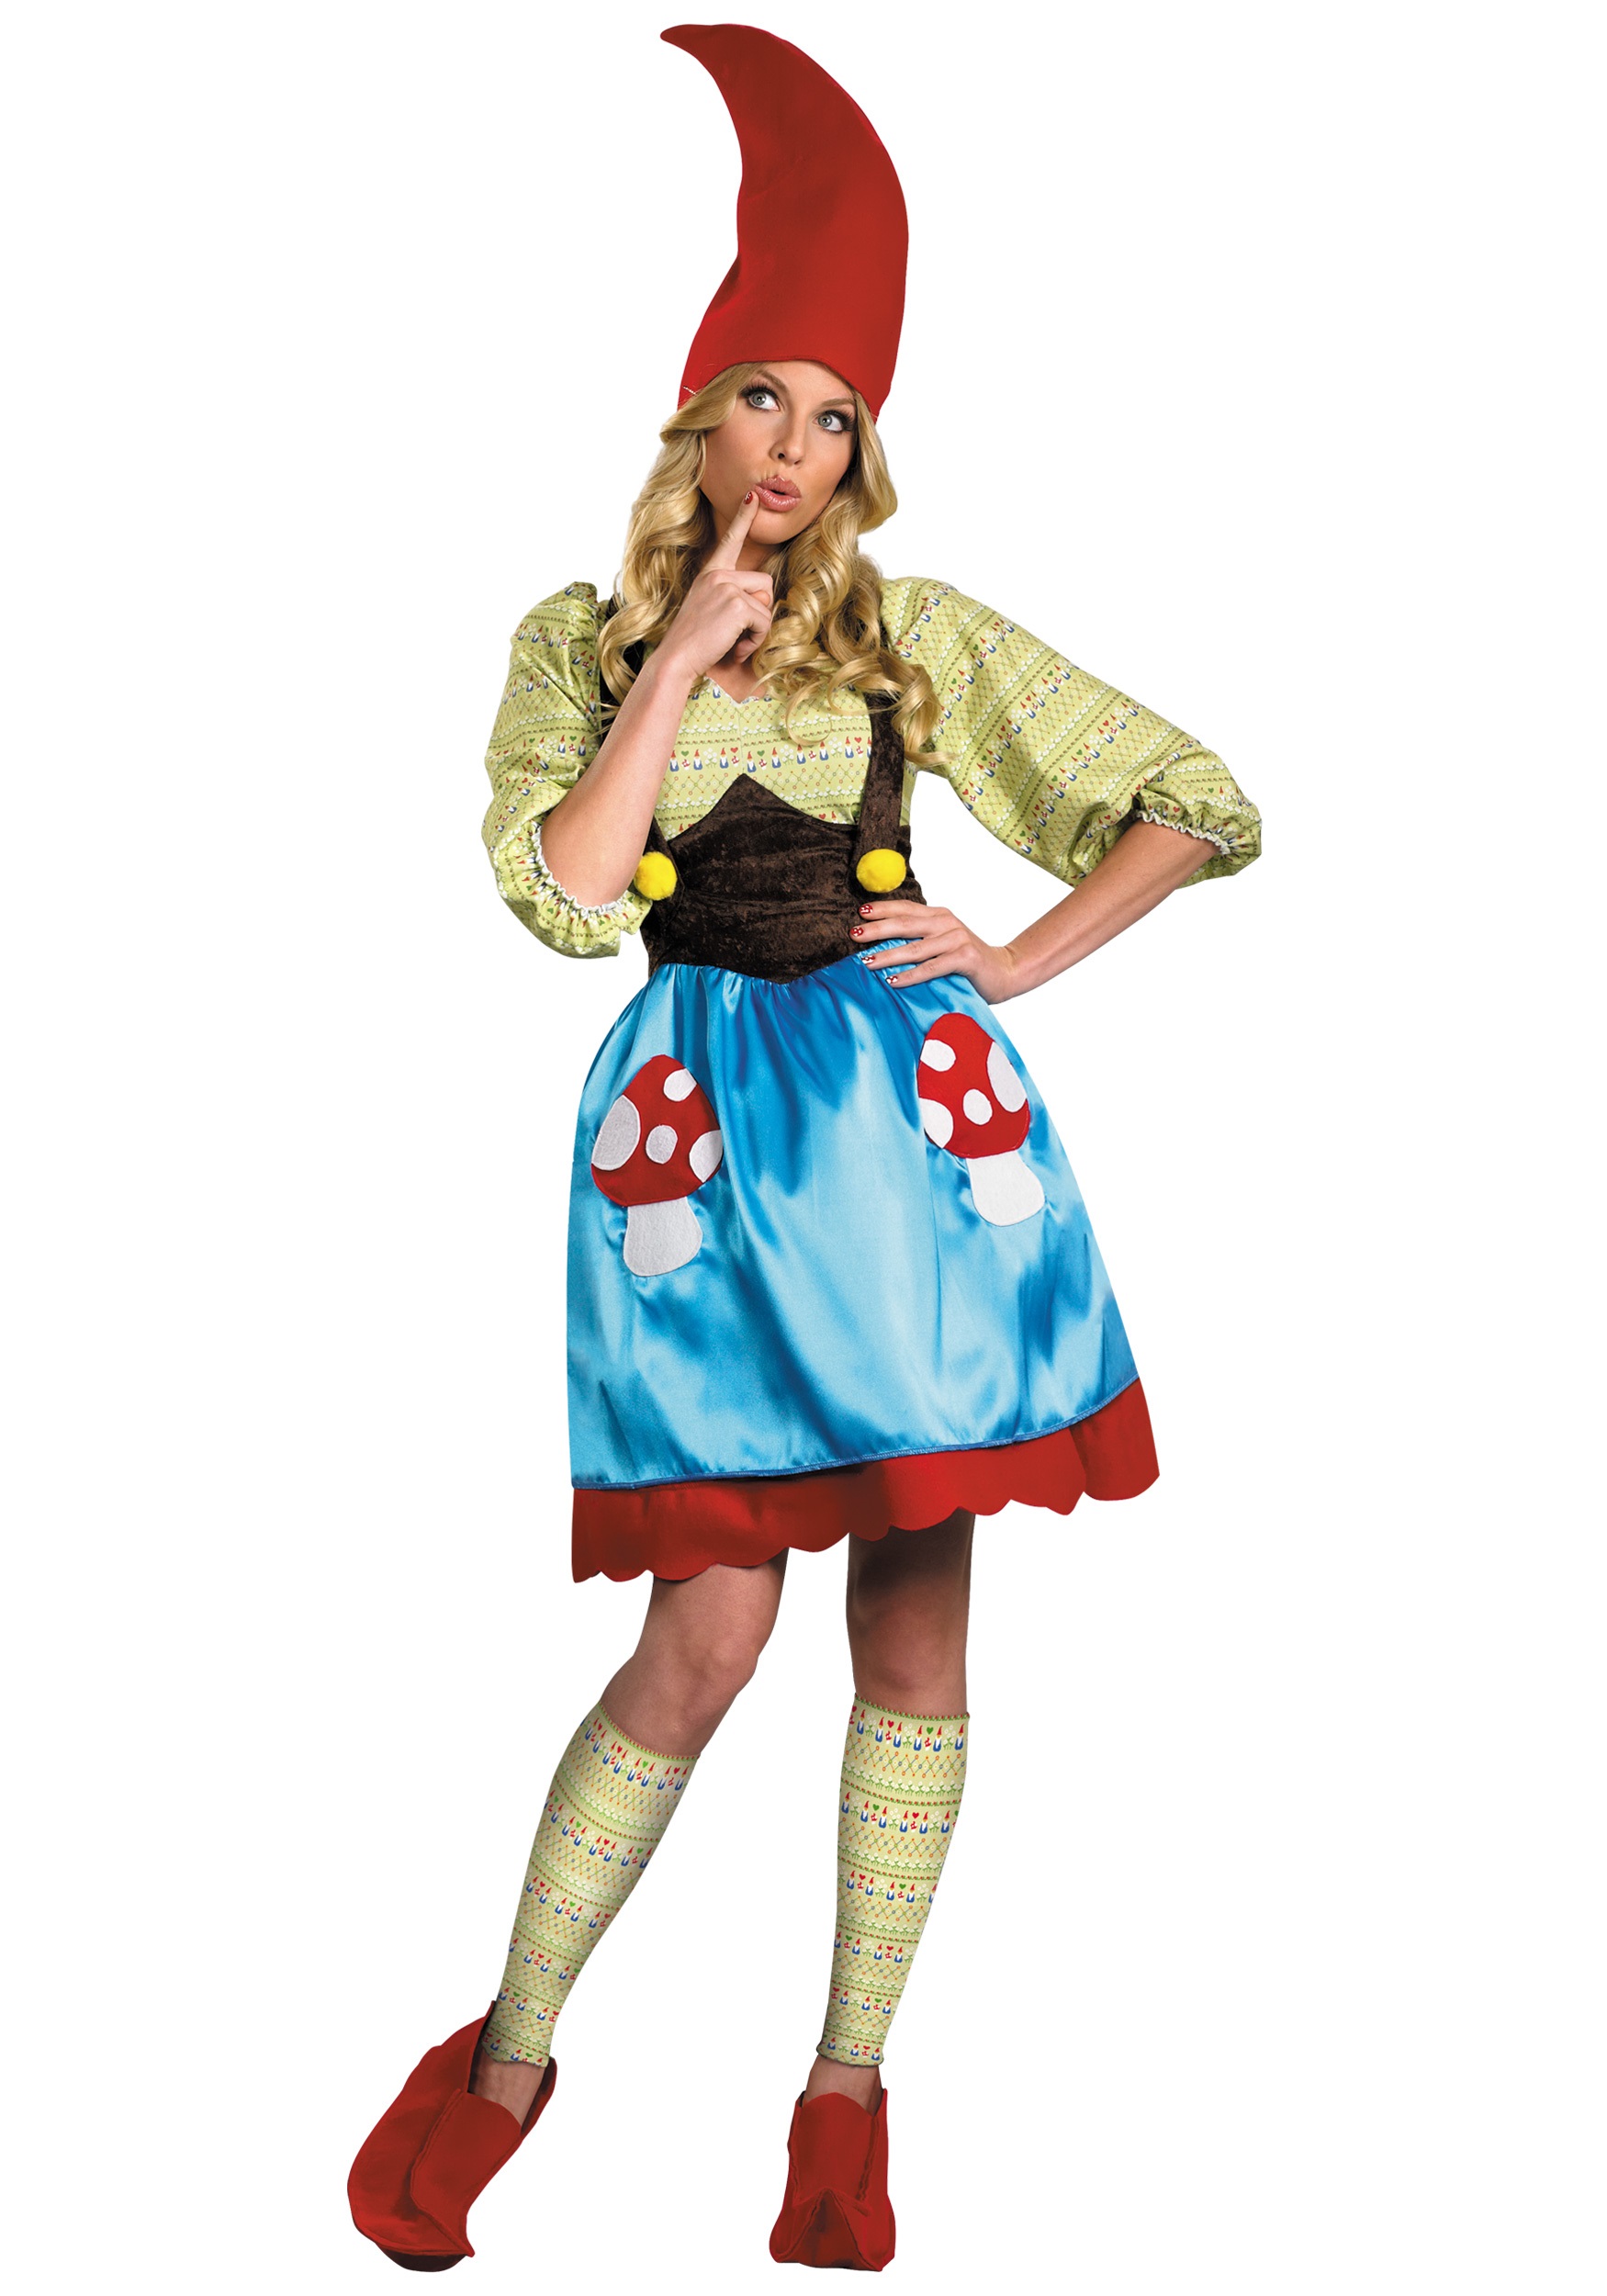 miss-gnome-costume.jpg